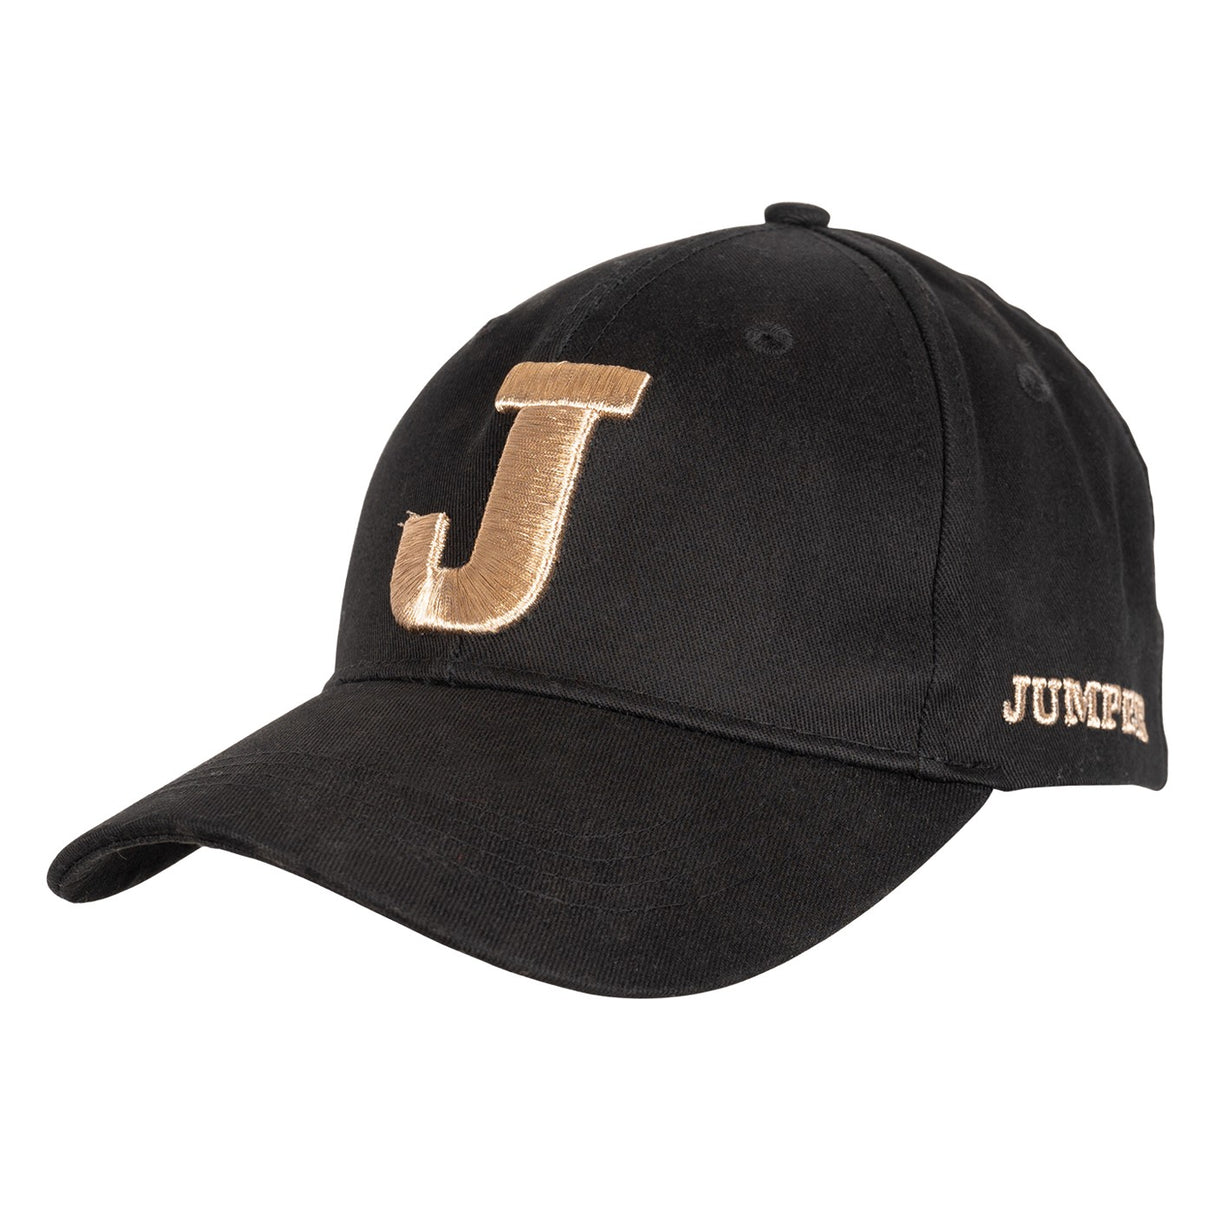 Cinto Jumper Baseball Hat